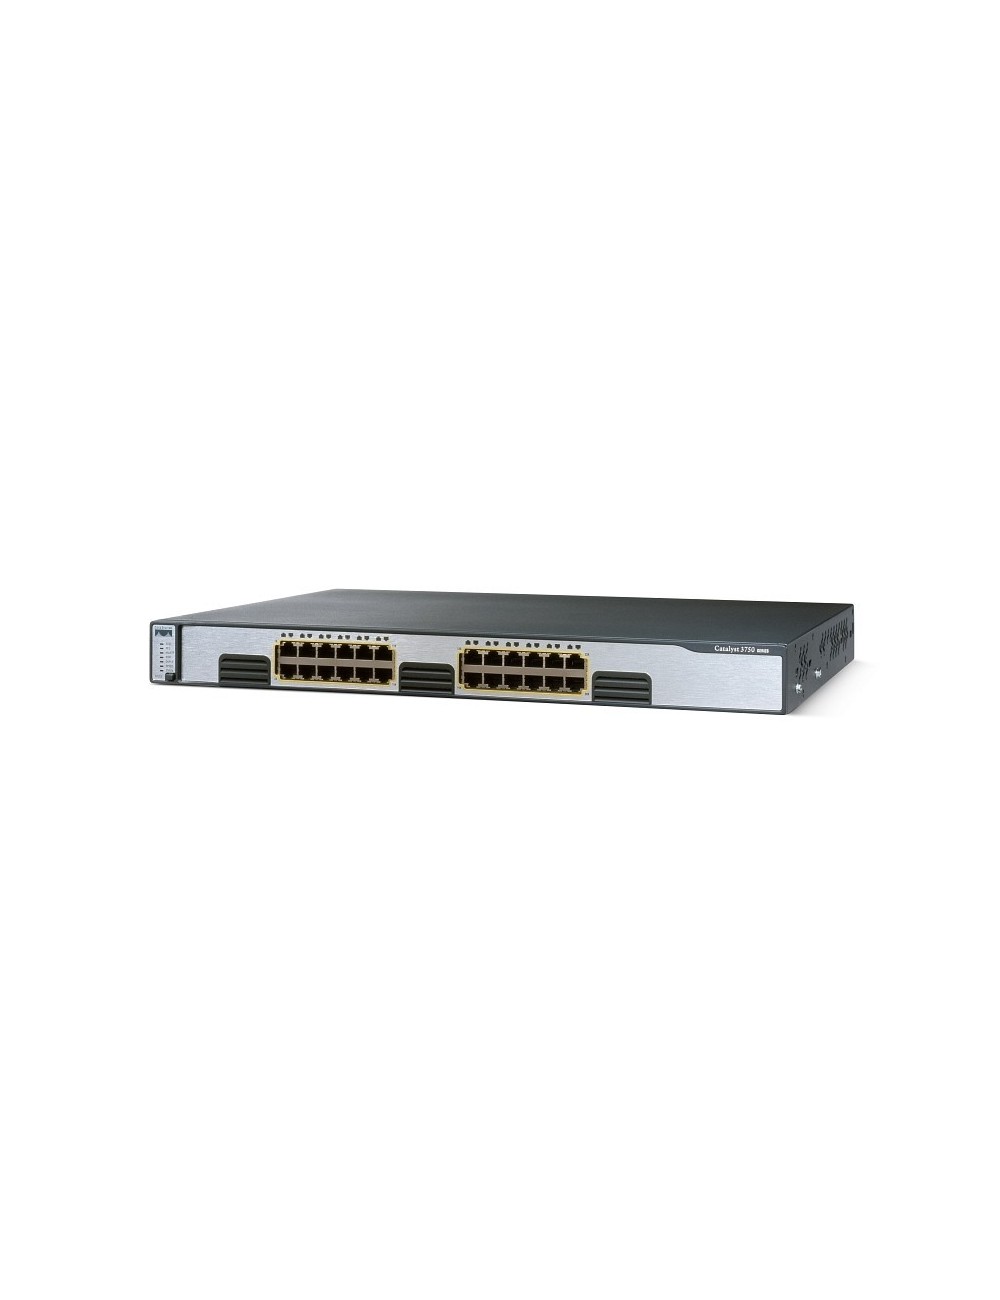 WS-C3750-24TS-S Cisco 3750 24PORT 10/100 2 SFP ML